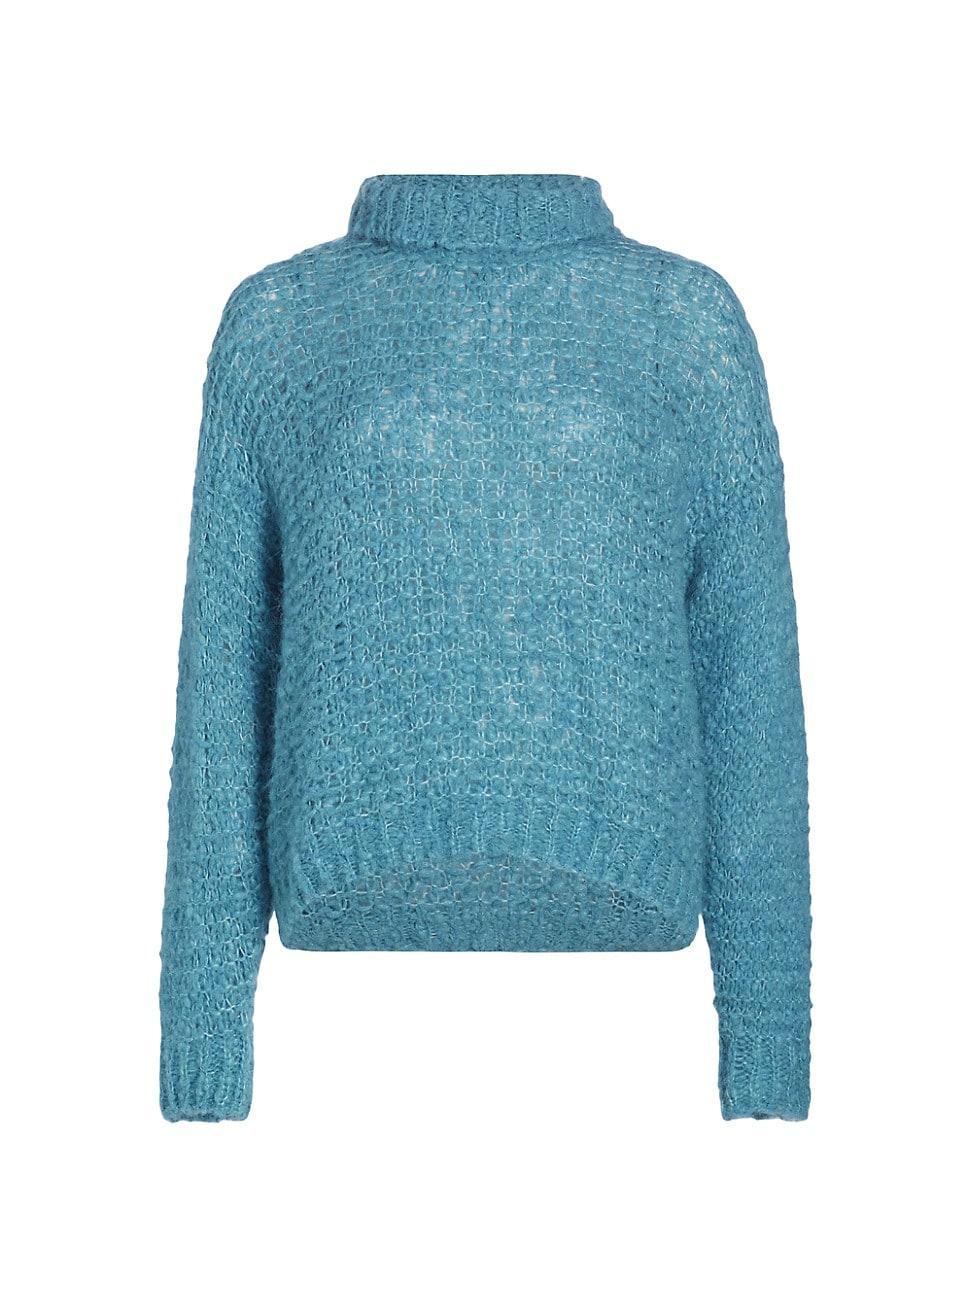 Womens Boucl Alpaca-Blend Turtleneck Sweater Product Image